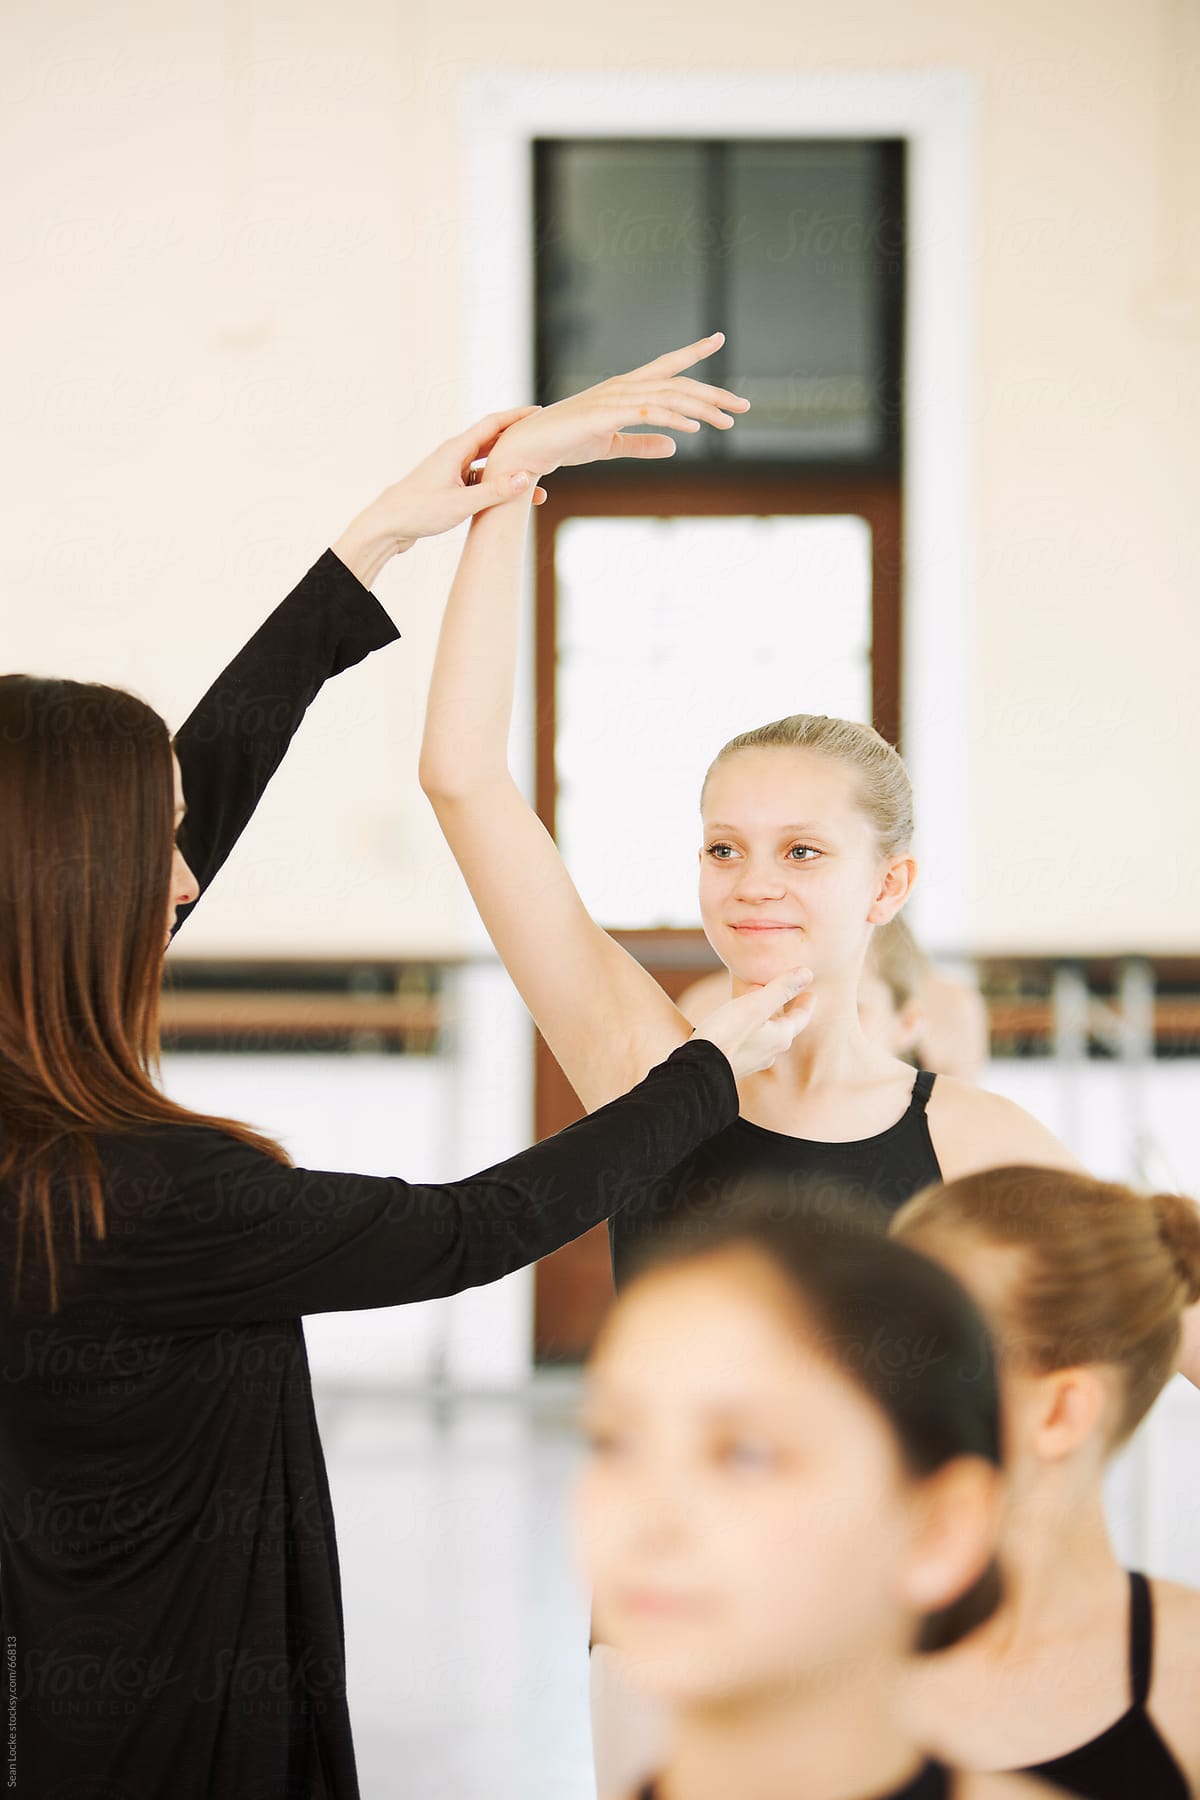 Ballet: Student Learning Proper Positioning